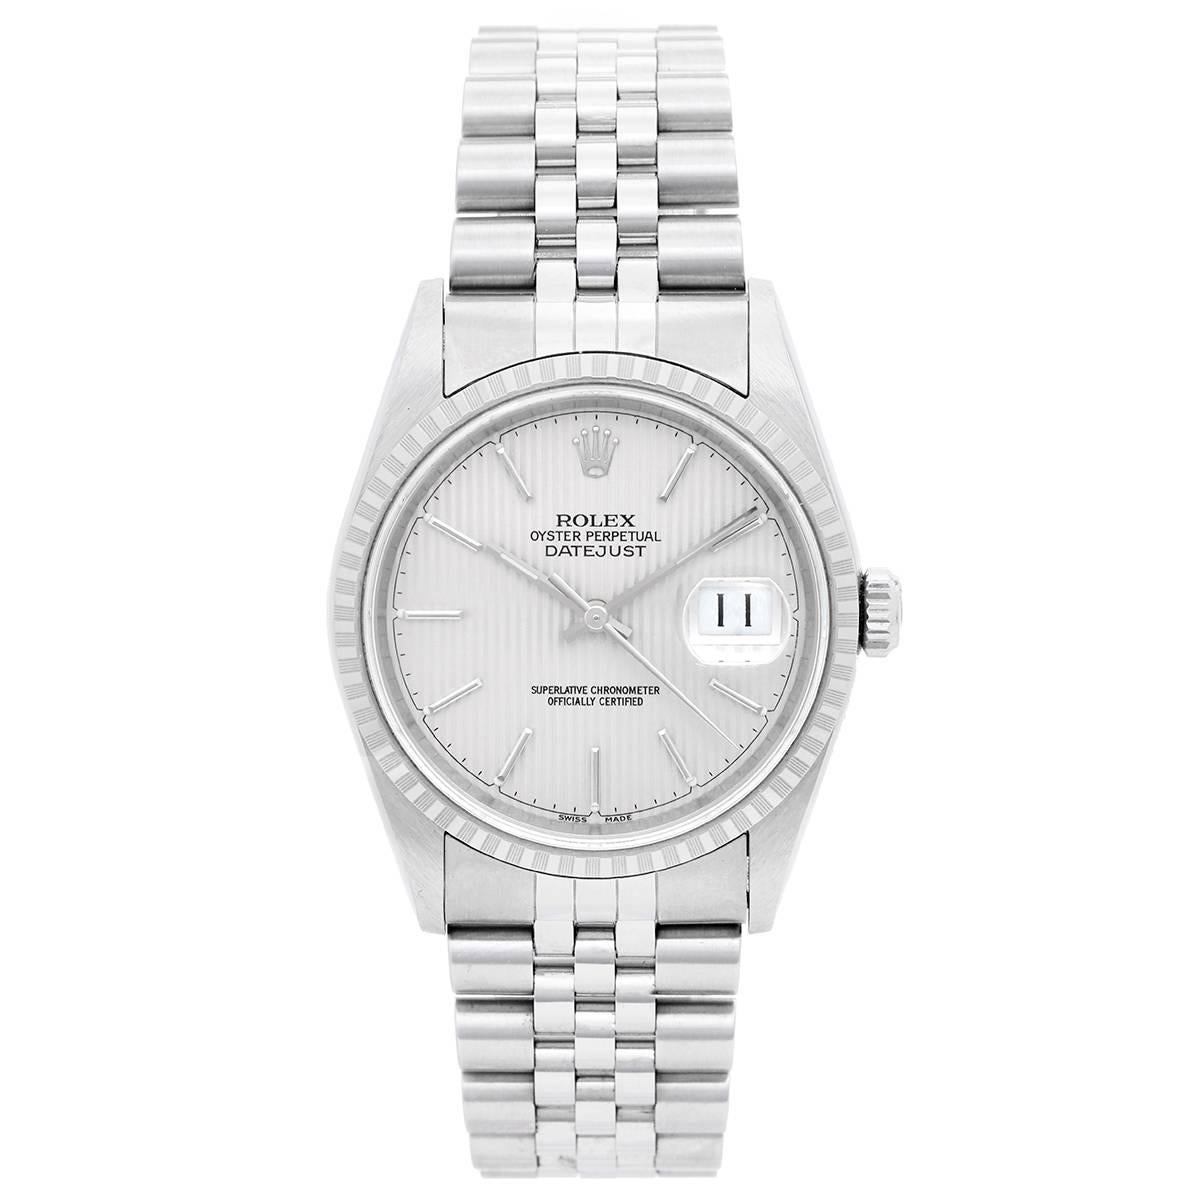 Rolex Stainless Steel Datejust Automatic Wristwatch Ref 16220